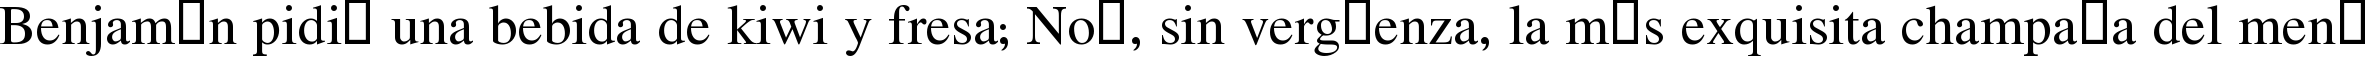 Пример написания шрифтом Nazli текста на испанском